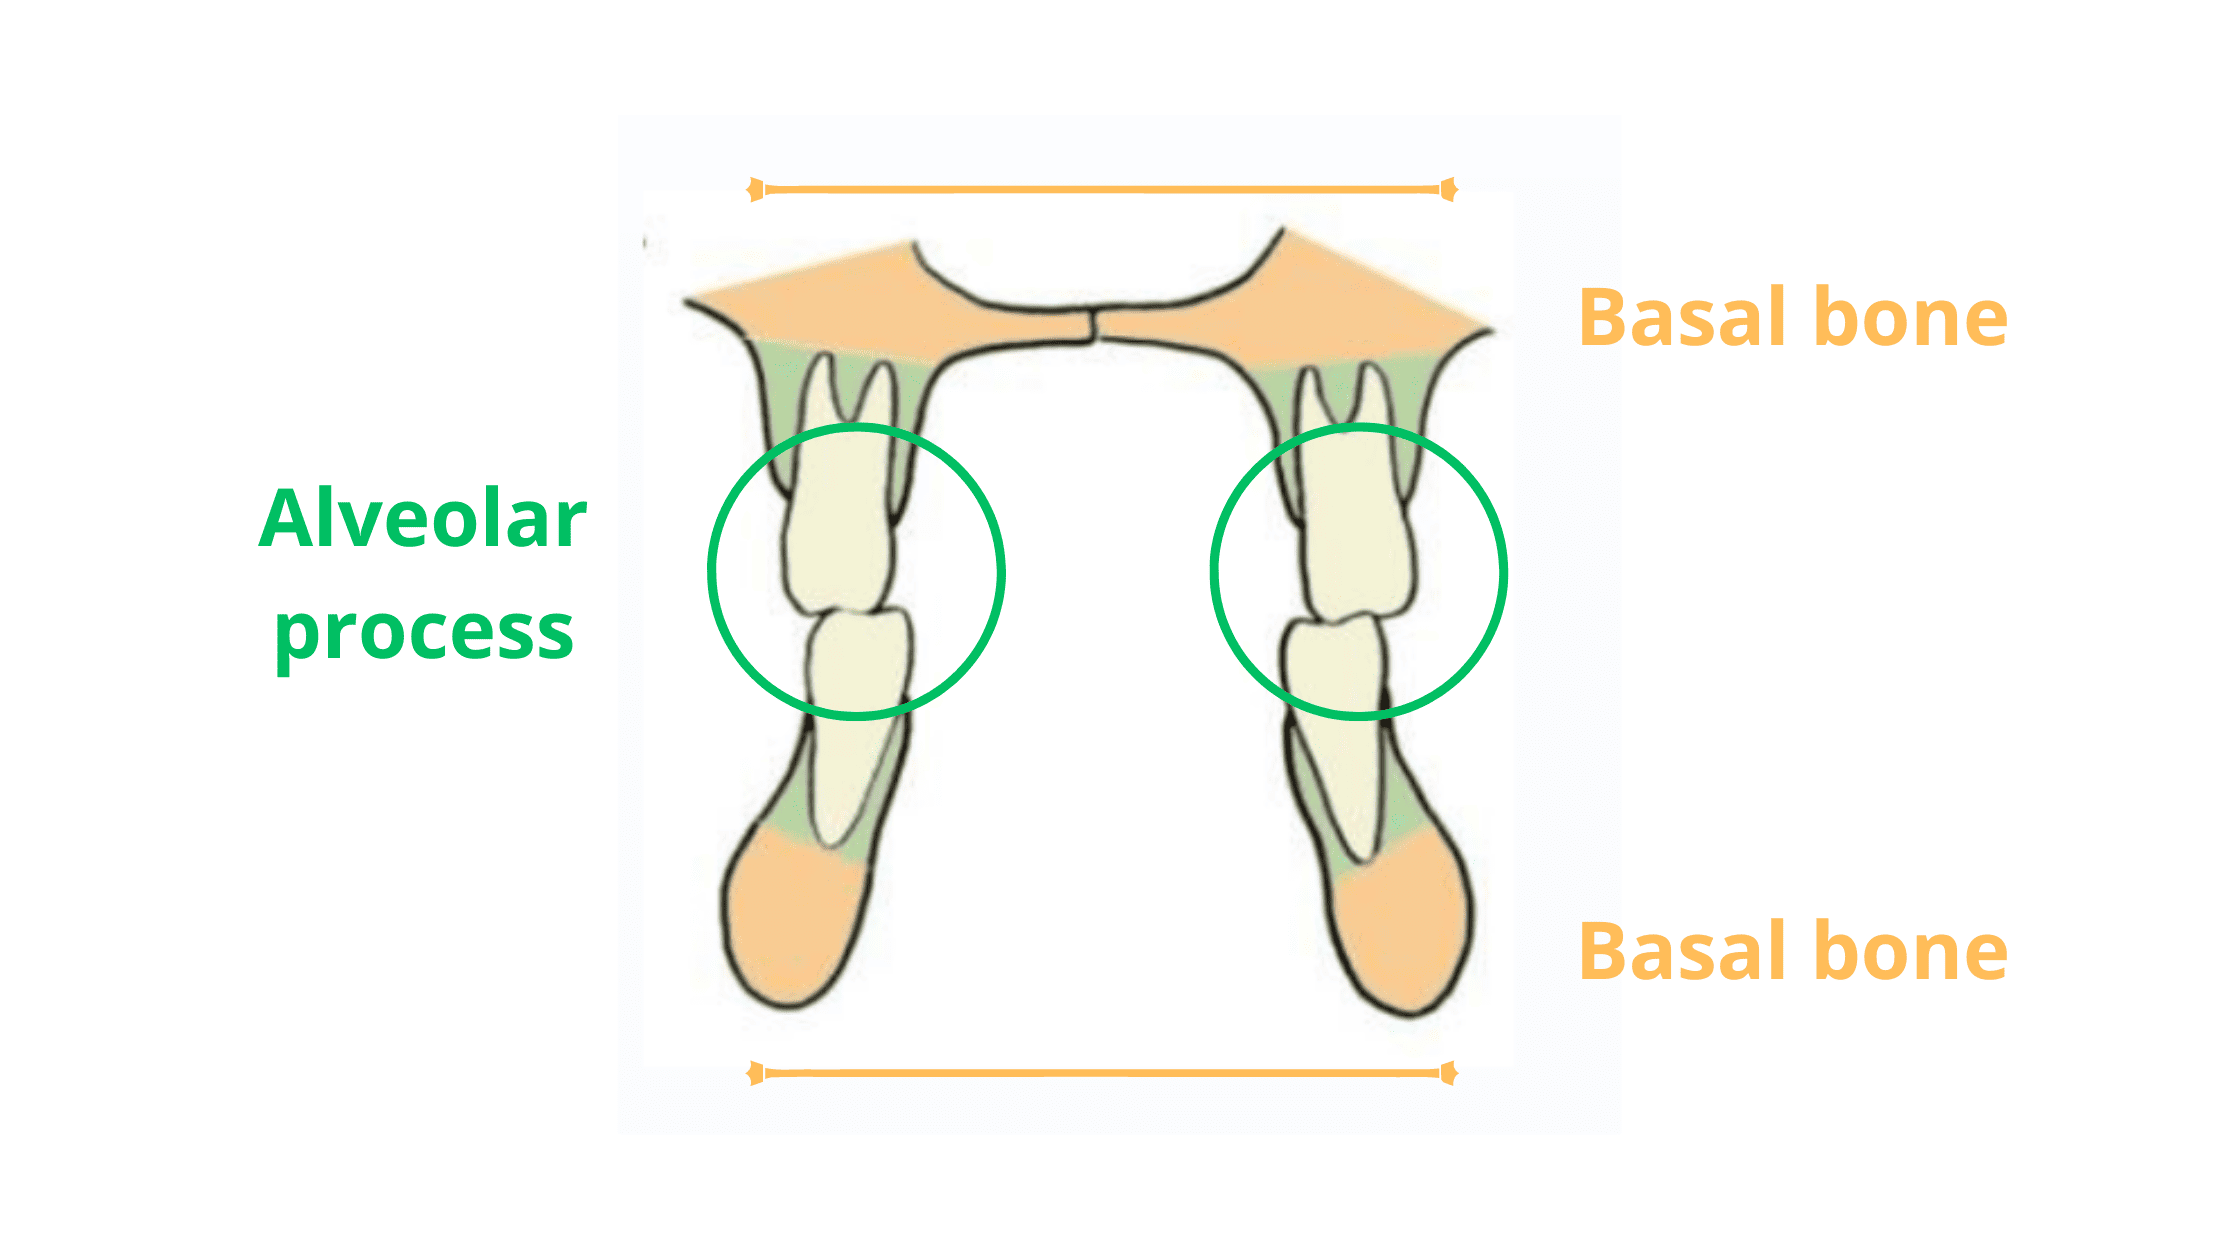 Alveolar process and basal bone